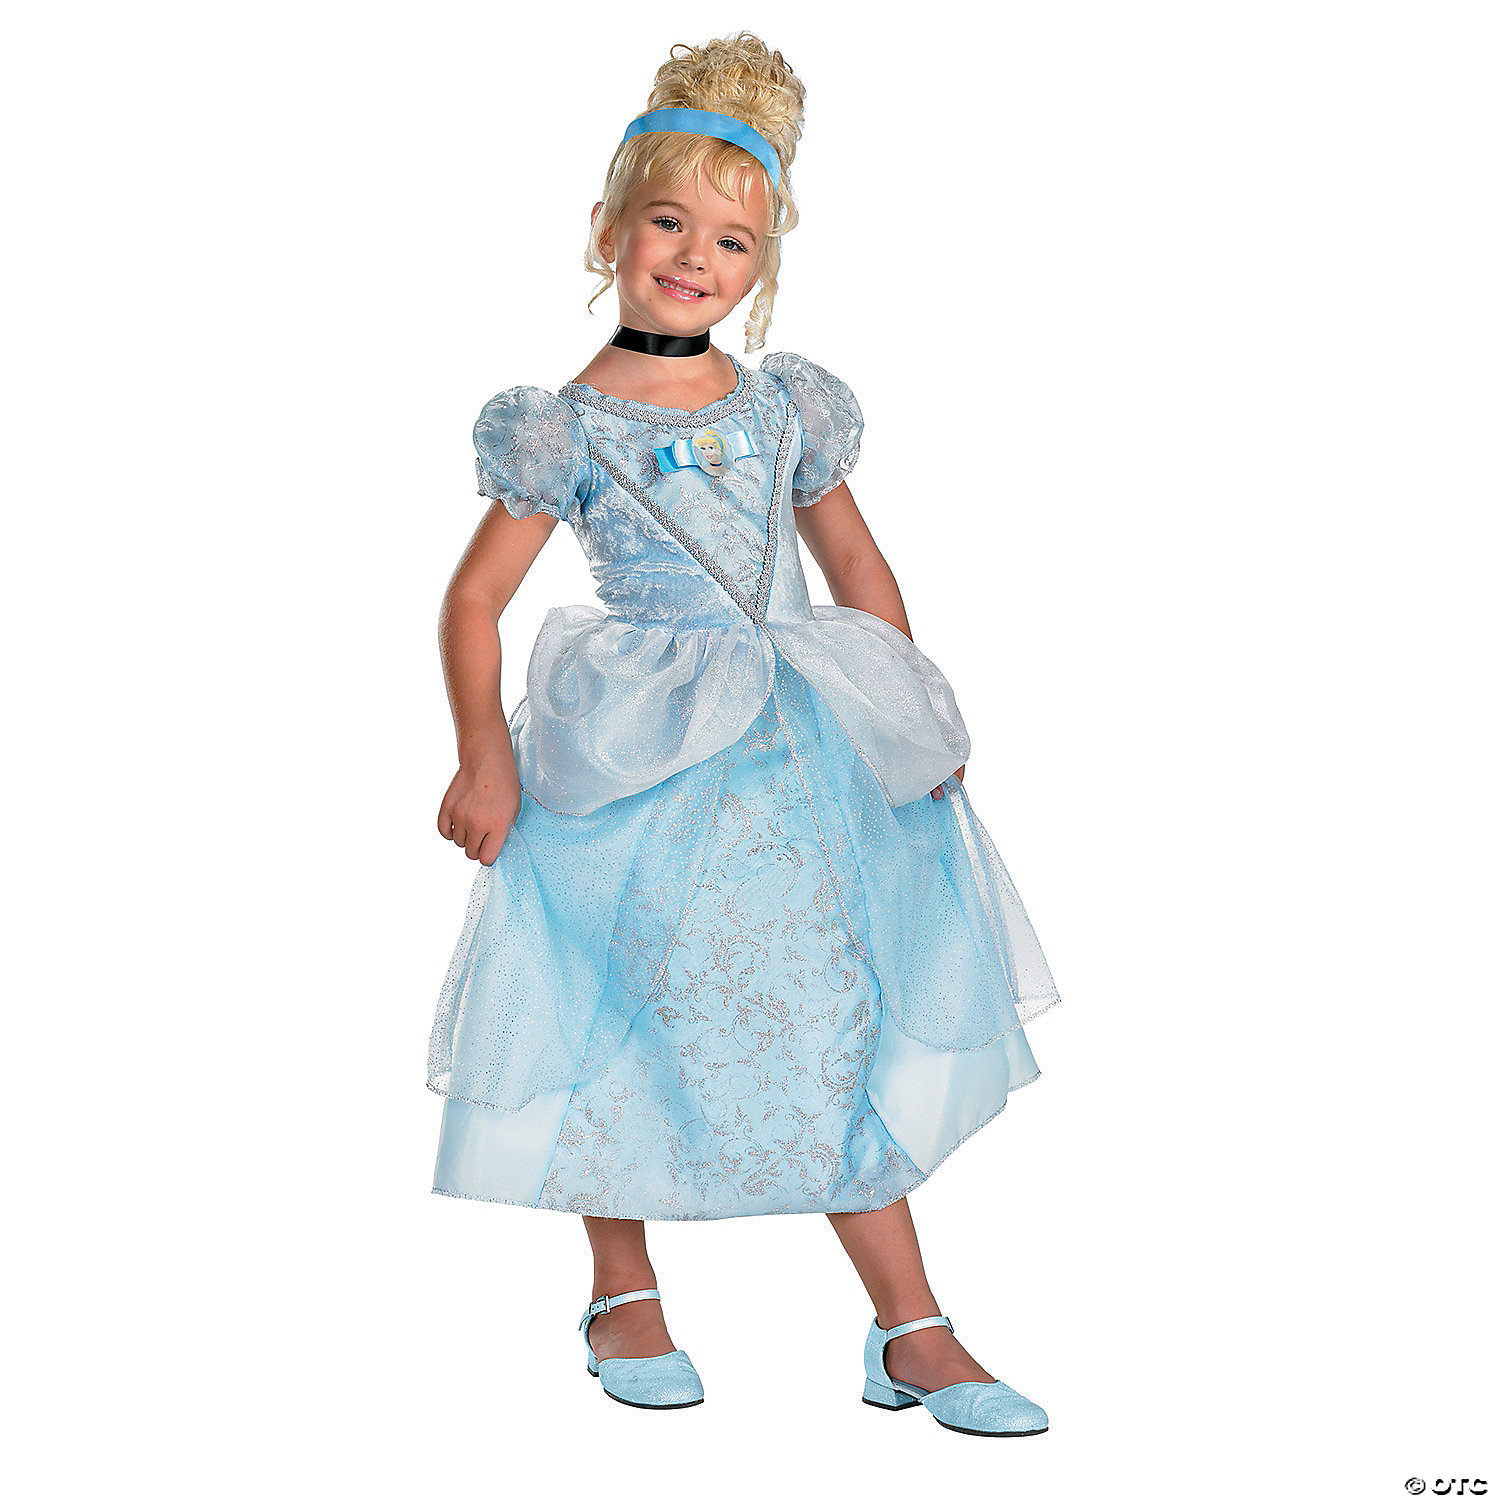 princess costume for teenager